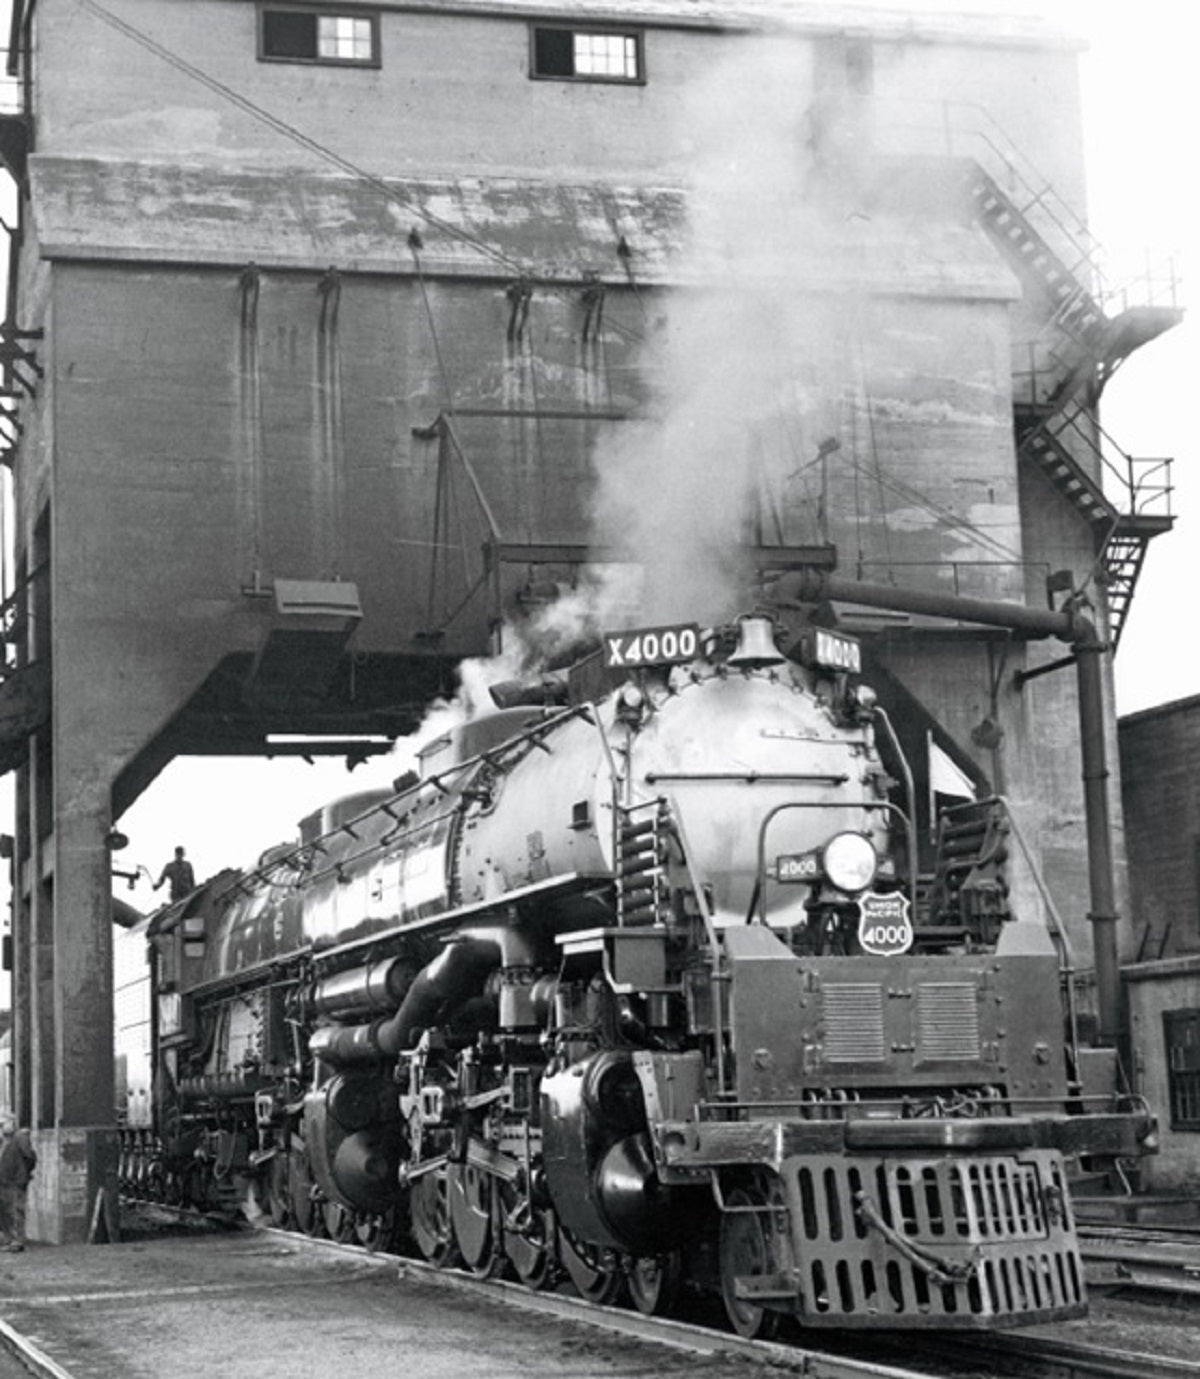 Lionel 2331600 - Vision Line Big Boy Steam Locomotive "Union Pacific" #4000 - Custom Run for MrMuffin'sTrains